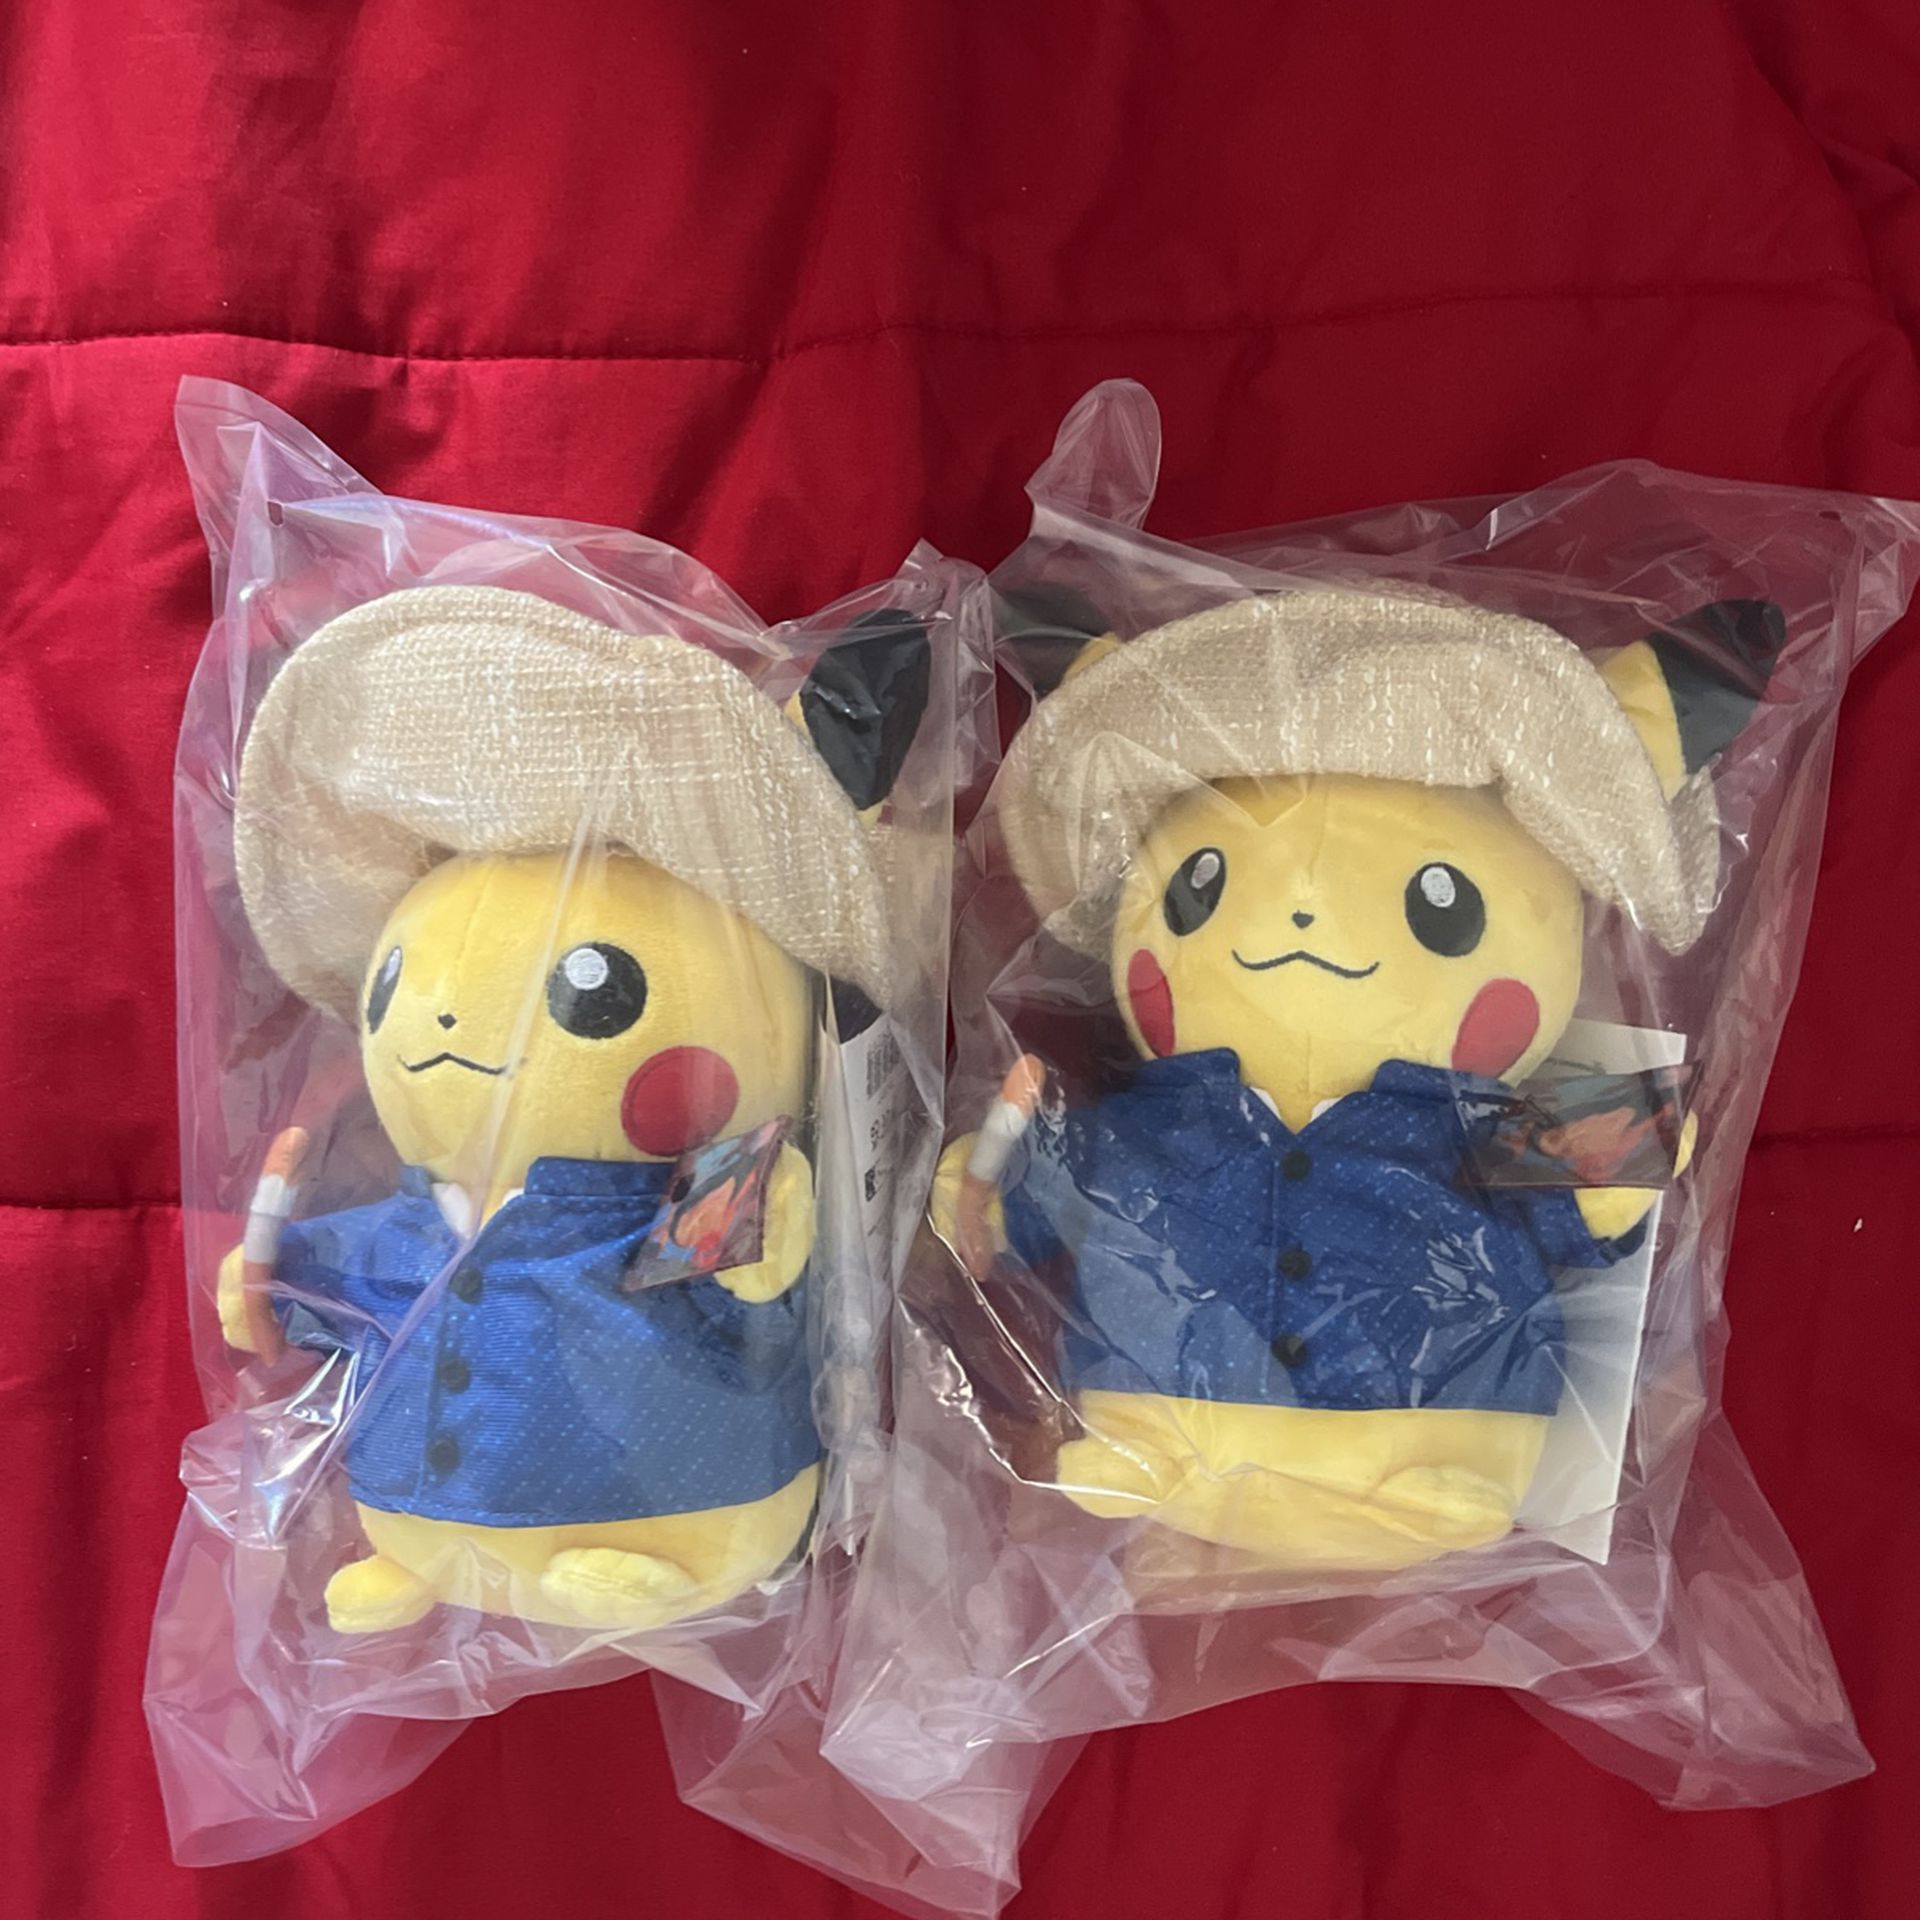 Pokémon Center x Van Gogh Museum 7 Inch Limited Edition Pikachu Plush Sealed.